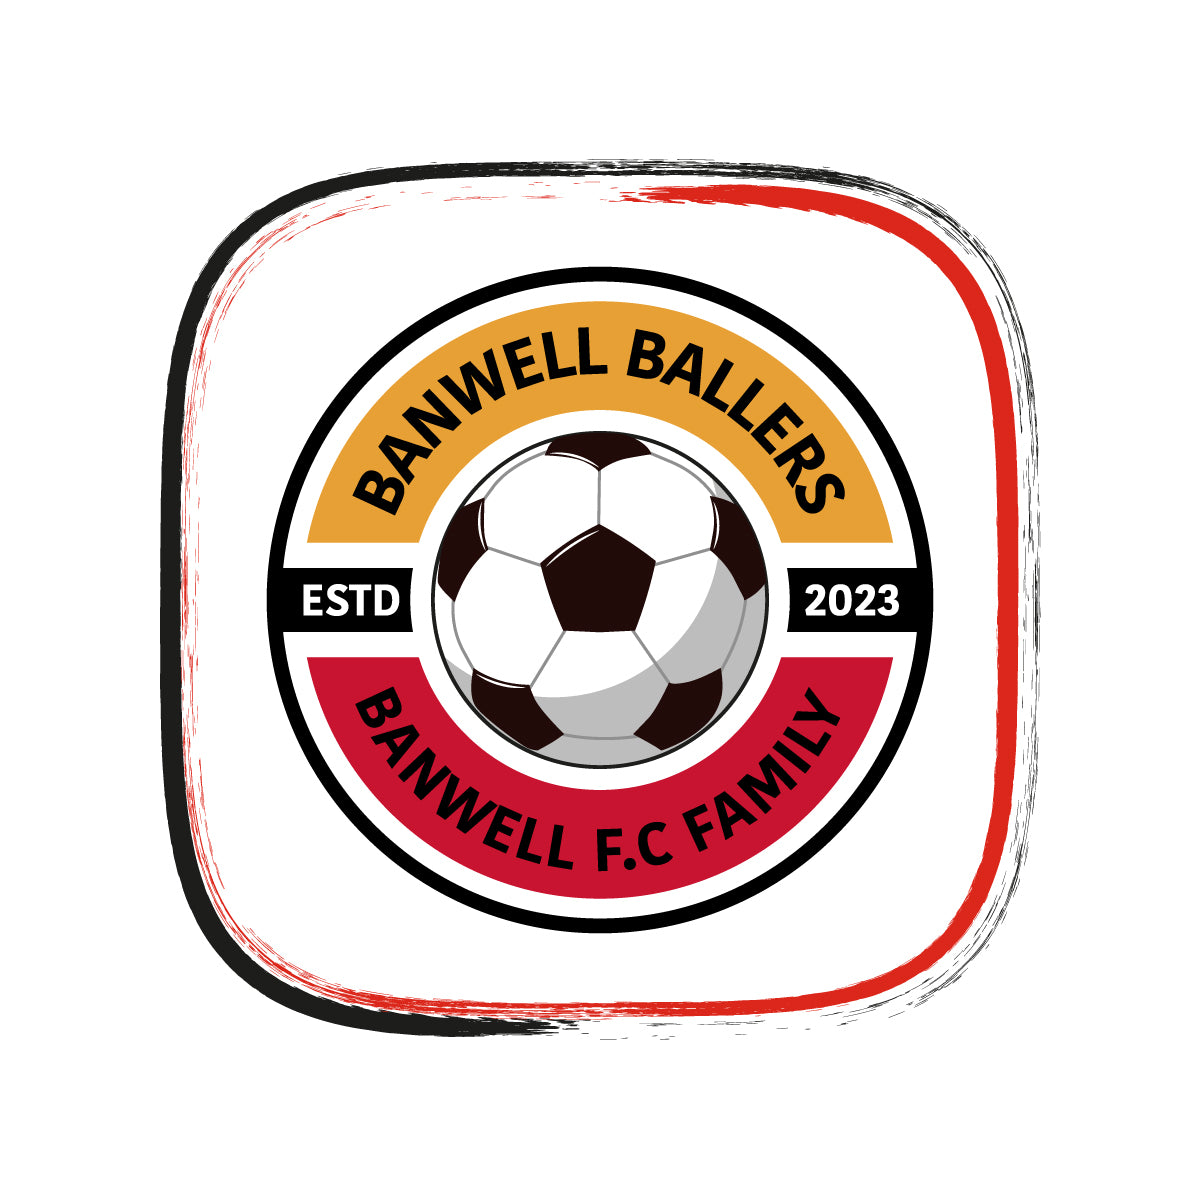 Banwell Ballers